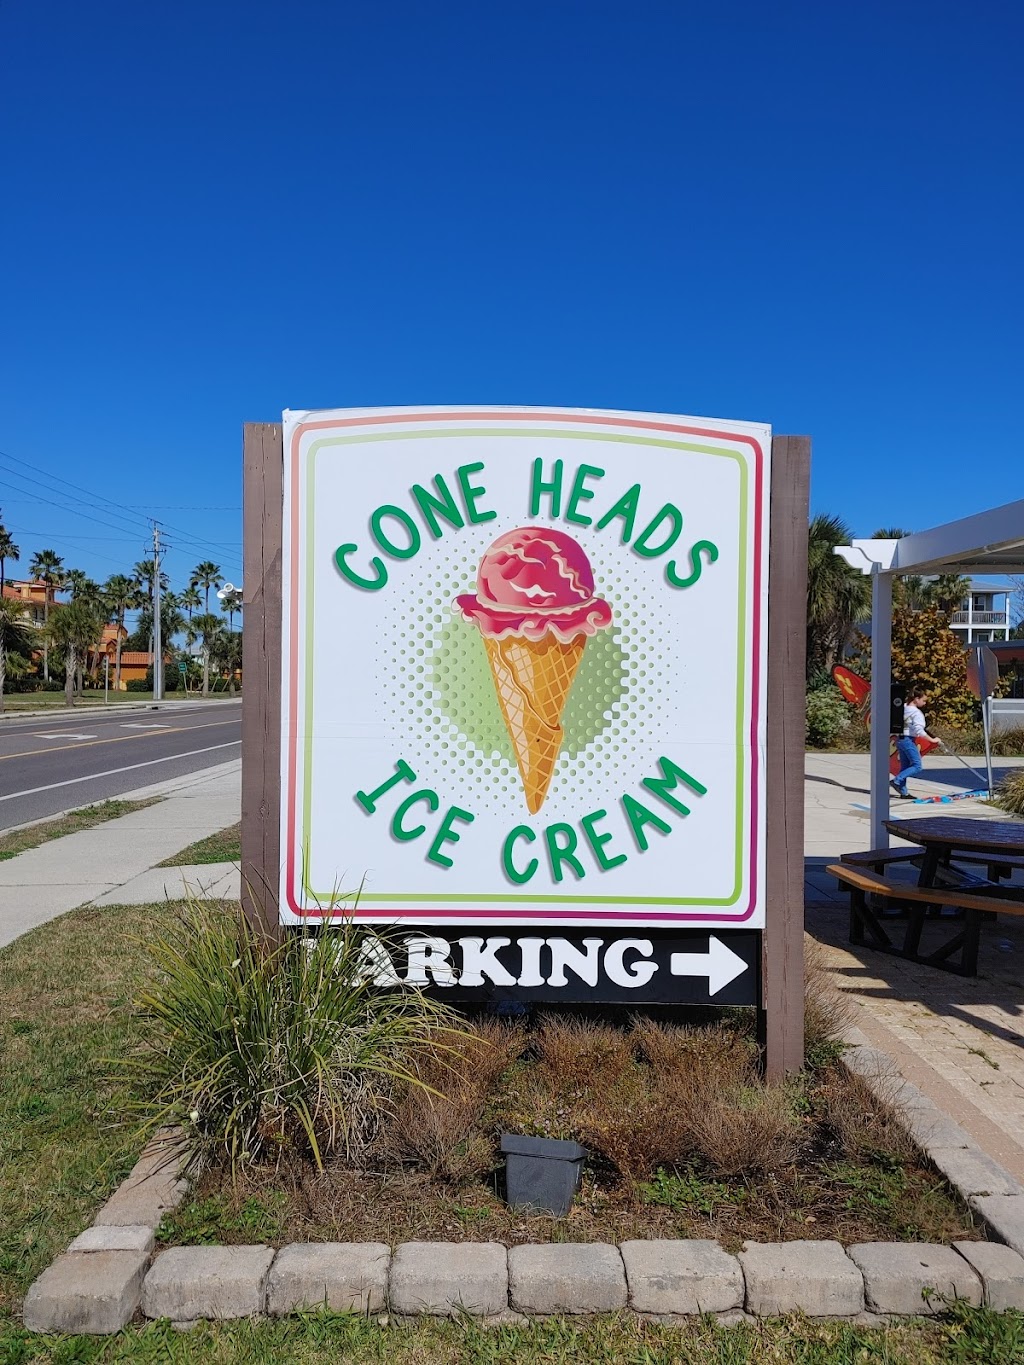 Cone Heads Ice Cream | 570 A1A Beach Blvd, St. Augustine, FL 32080 | Phone: (904) 460-2878